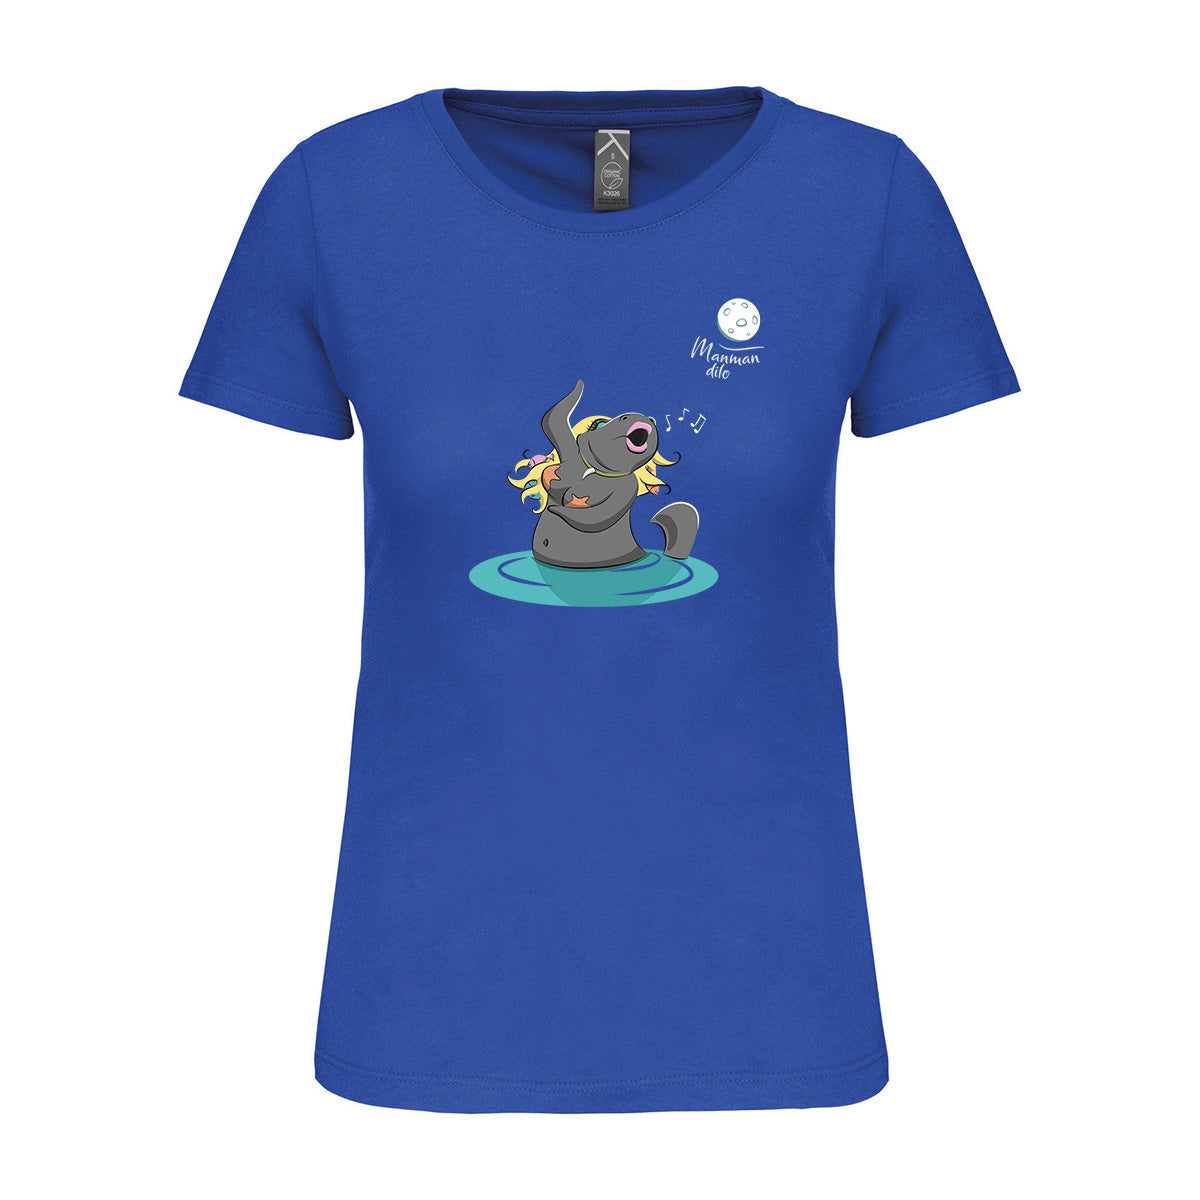 bat wey  - T-shirt femme illustration Manman dilo - Guyane - Bleu roi